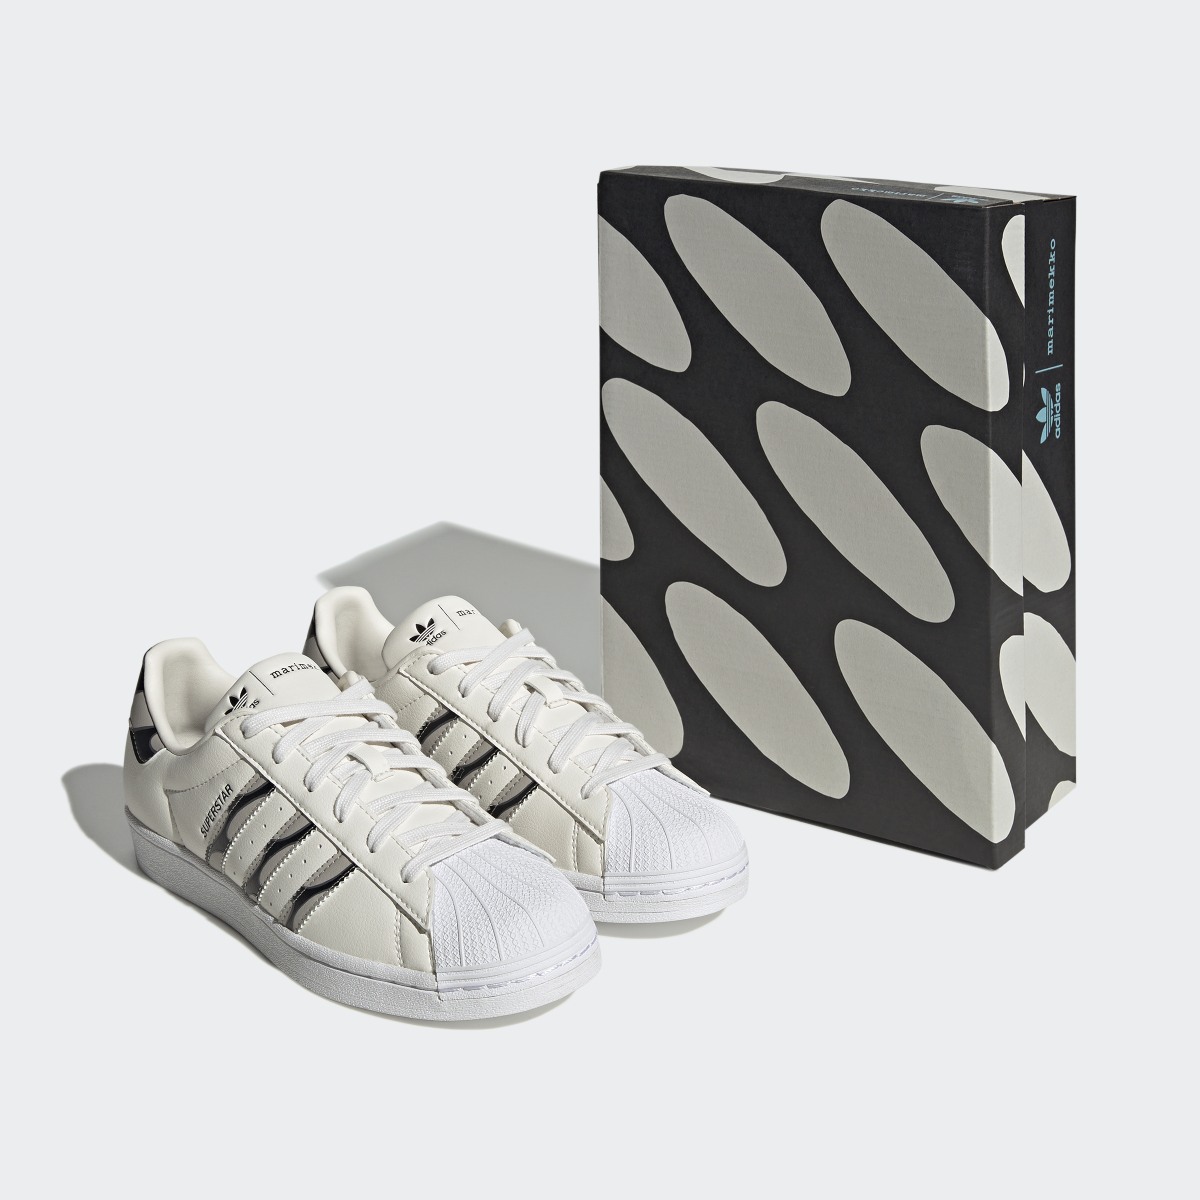 Adidas x Marimekko Superstar Shoes. 10